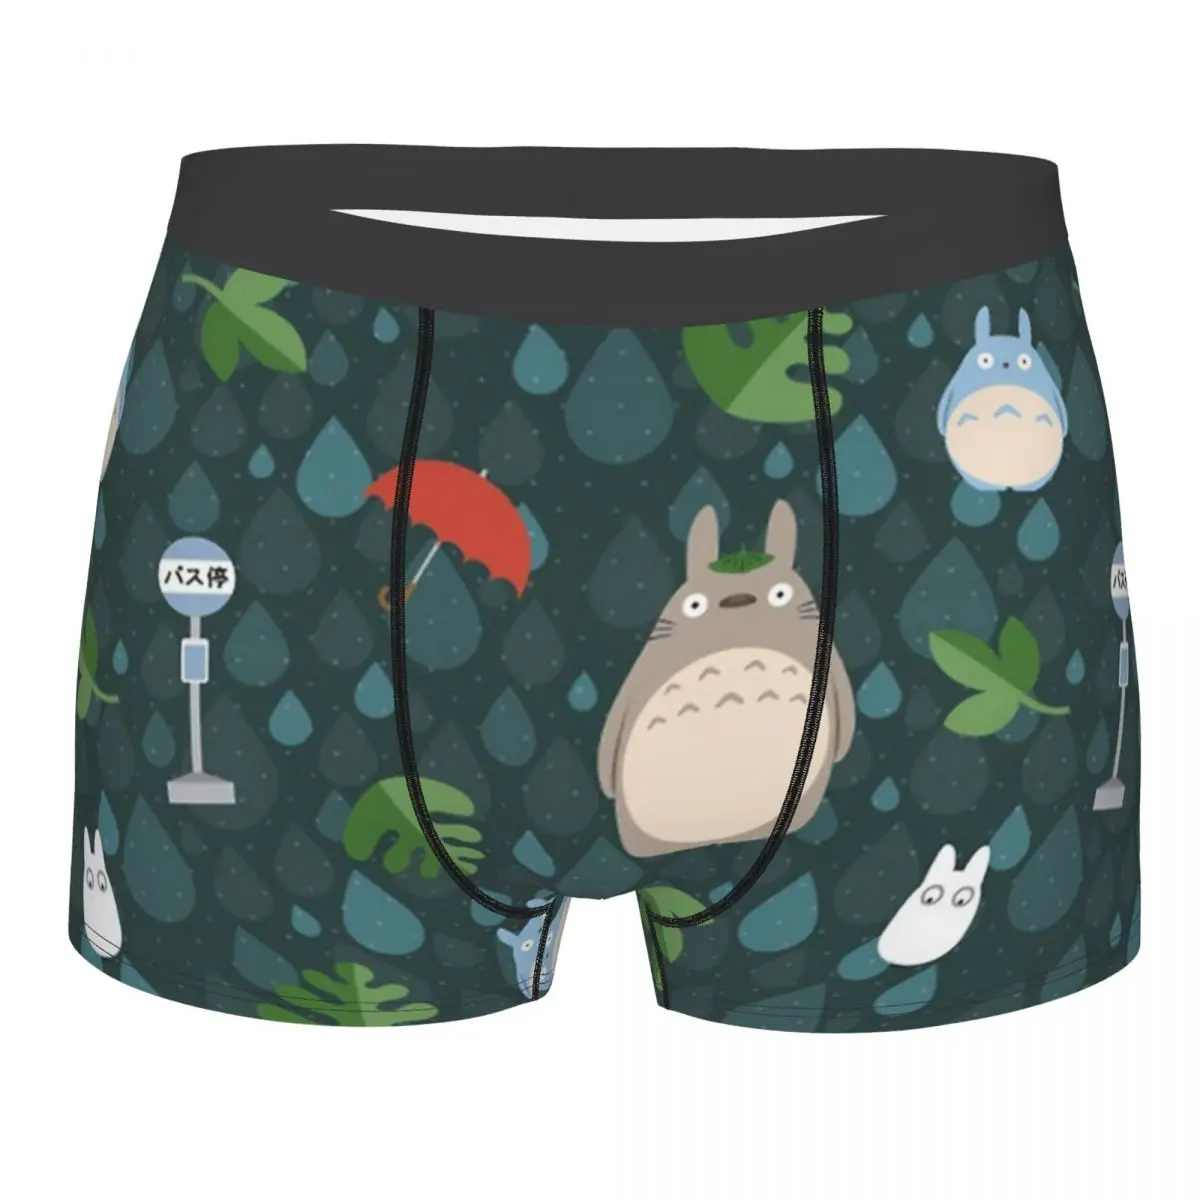 Ghibli-Calzoncillos Bóxer con estampado para hombre, ropa interior, Sexy, transpirable, con diseño de nethers Totoro, para S-XXL